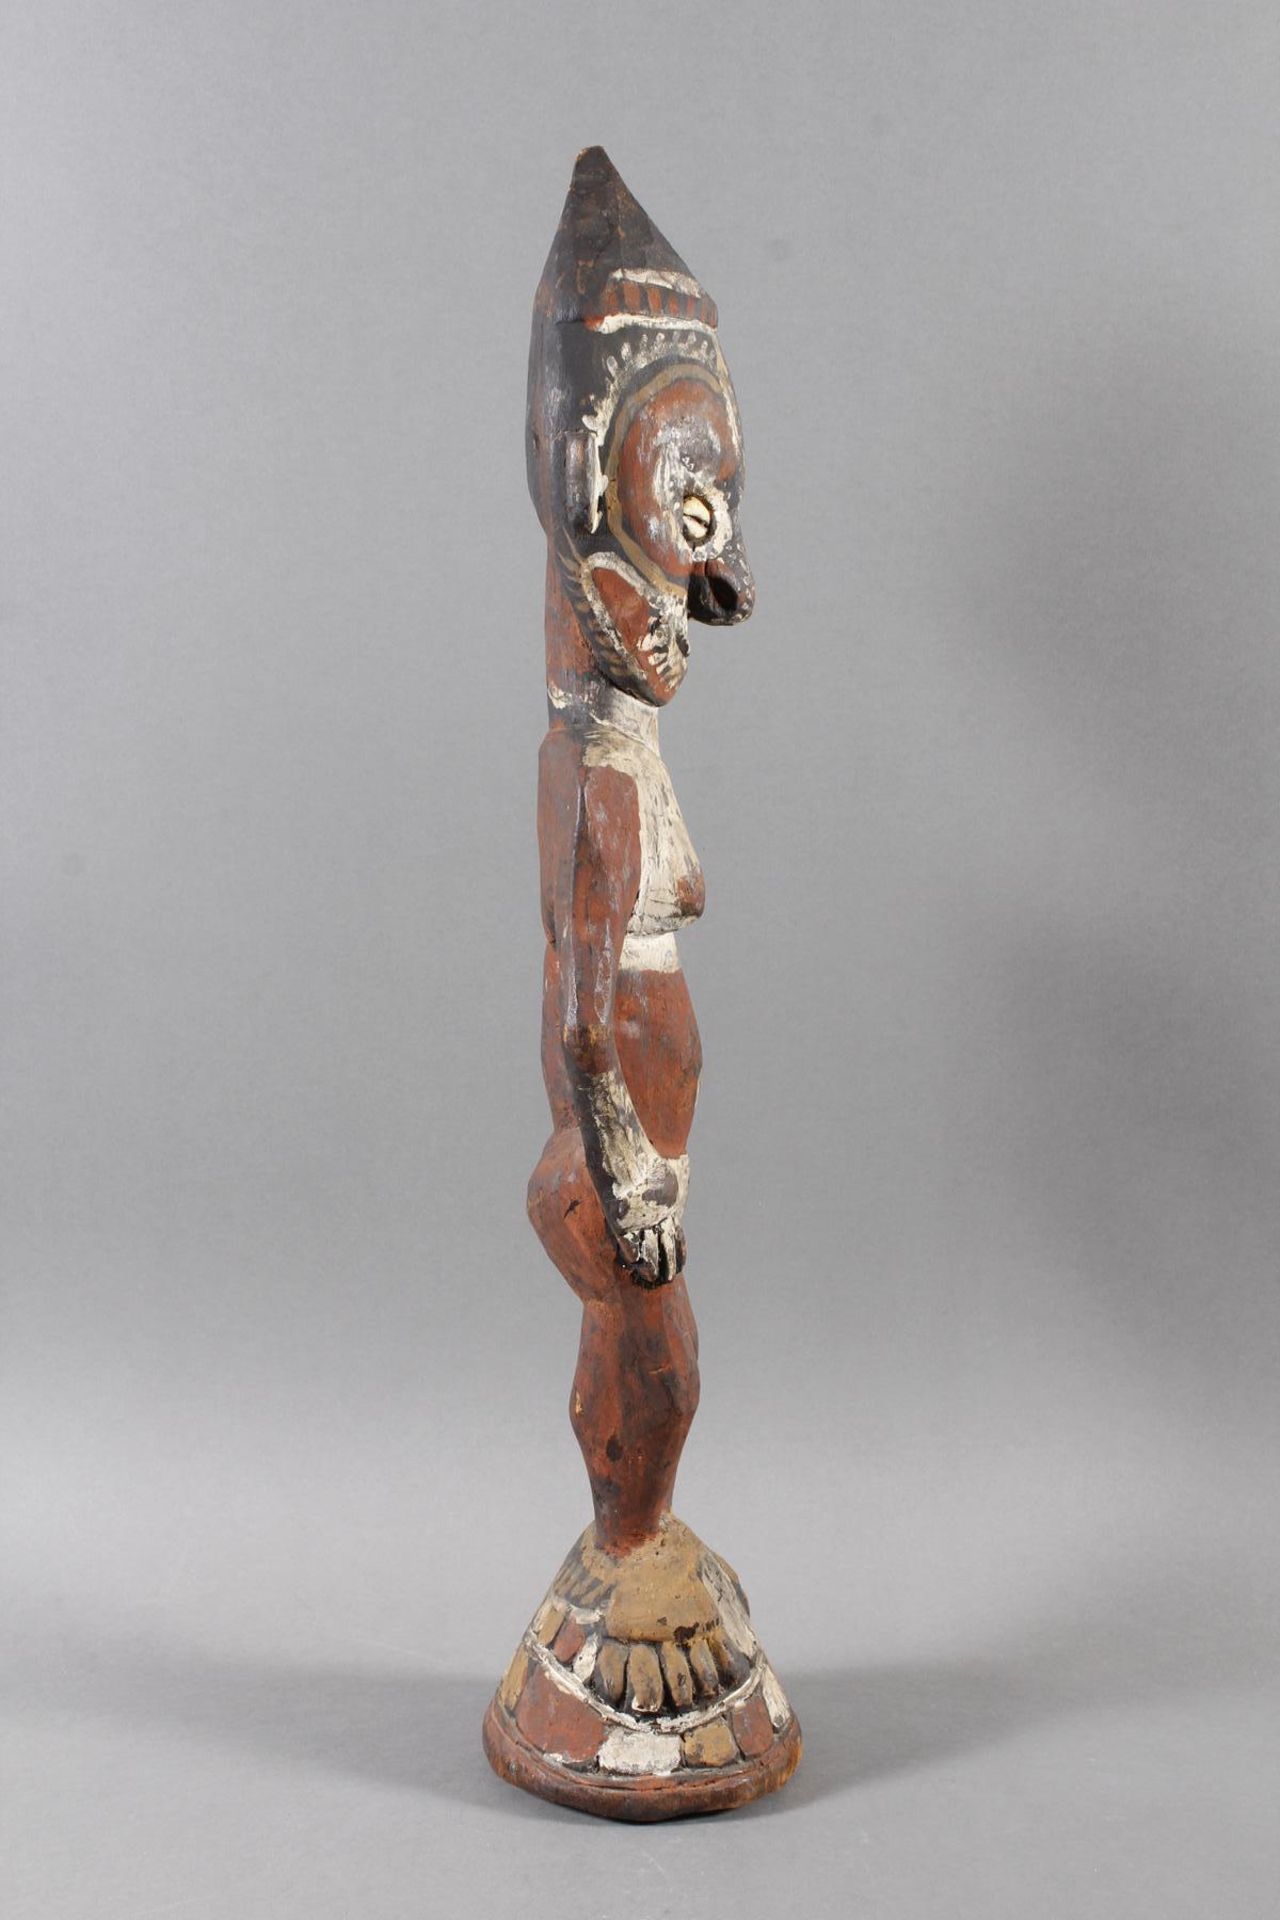 Ahnenskulptur der Sepik- Papua New Guinea - Image 4 of 8